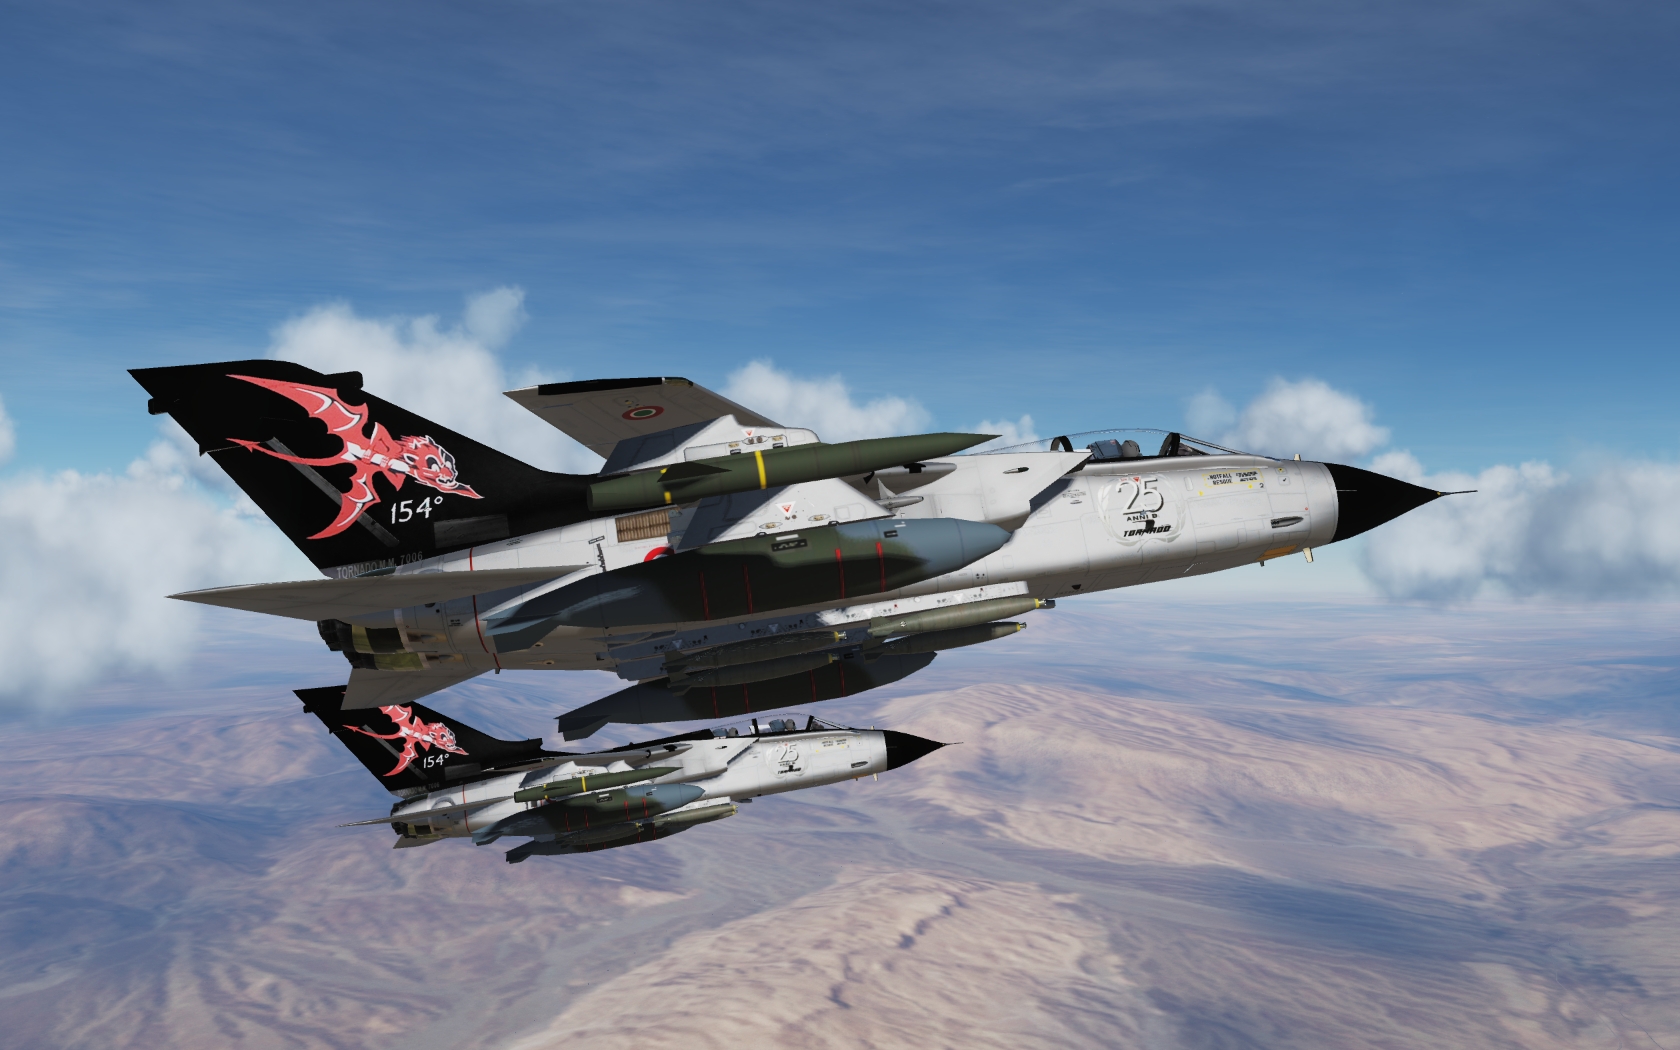 DCS WORLD 米格21比斯 + 米格29 + Tornado + A-10  混战游戏截图-5481 